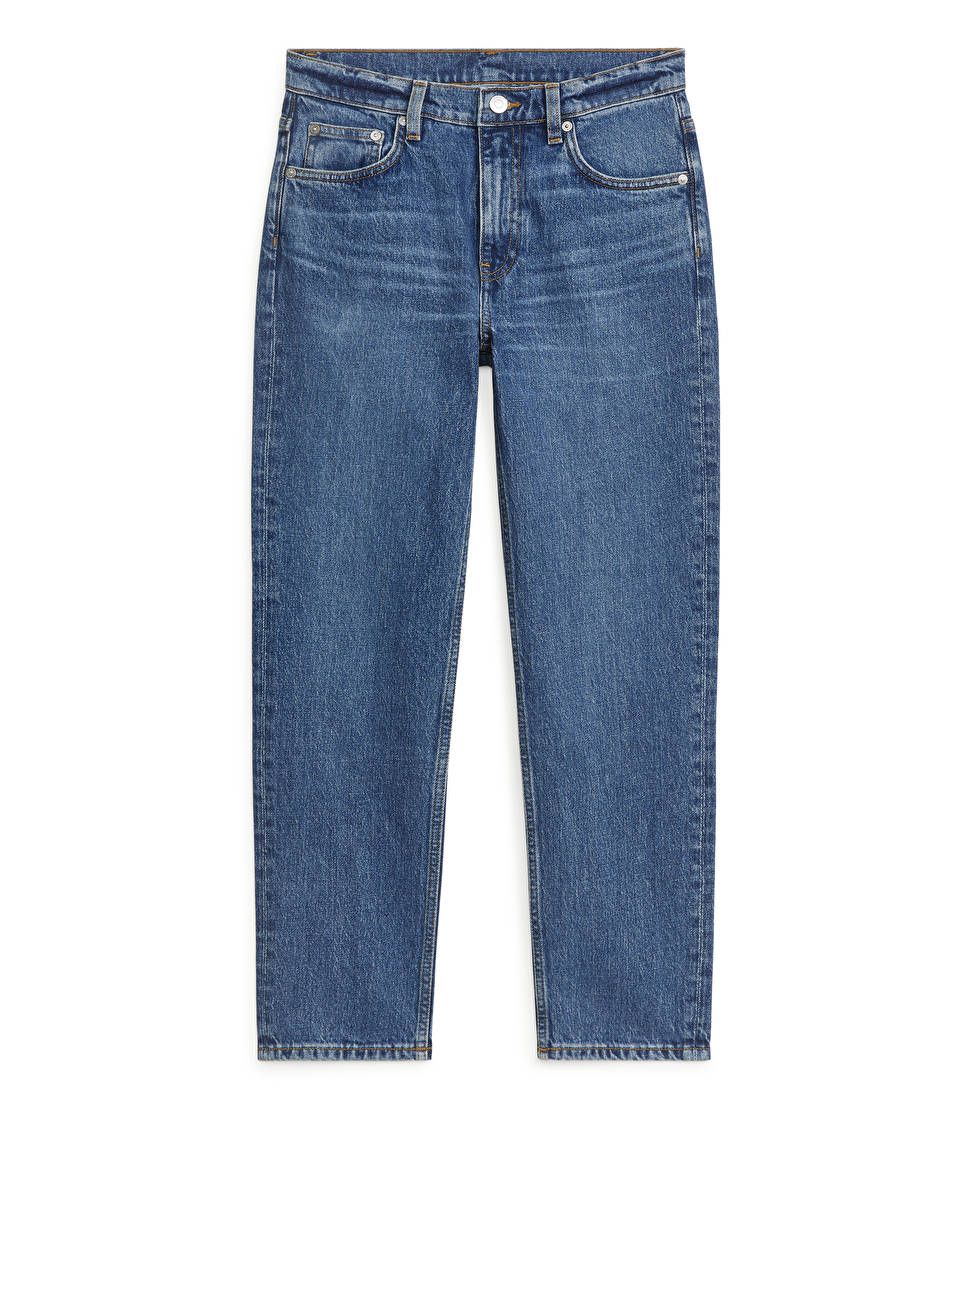 JADE CROPPED Slim Stretch Jeans | ARKET (US&UK)